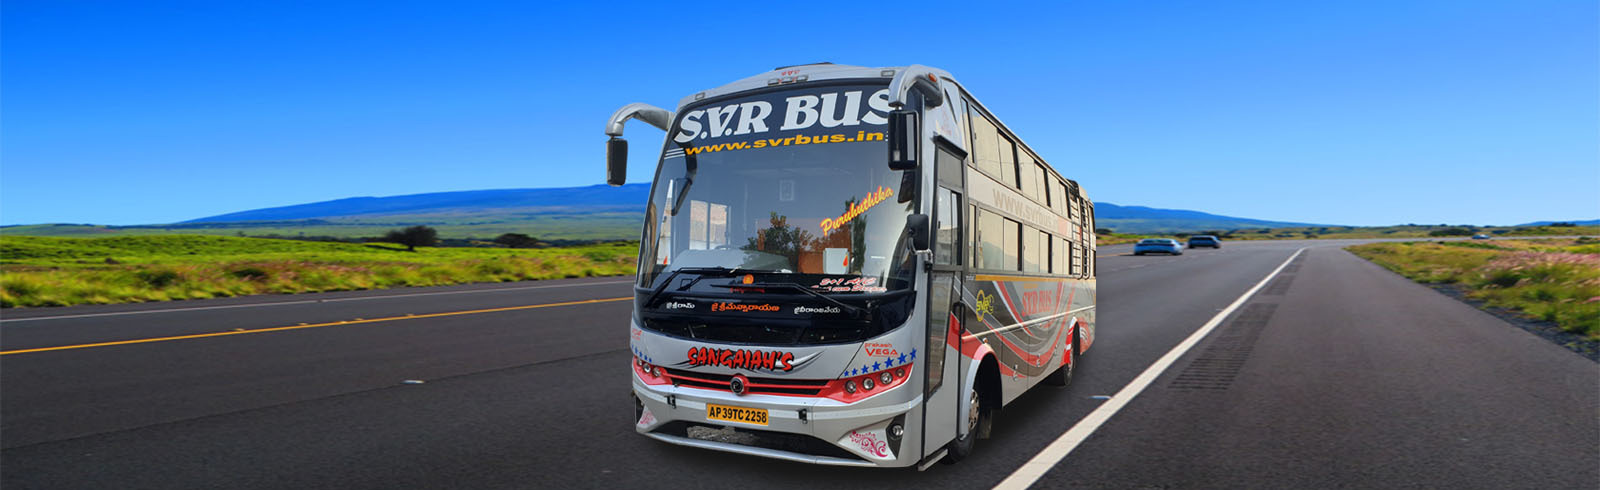 svr travels bus